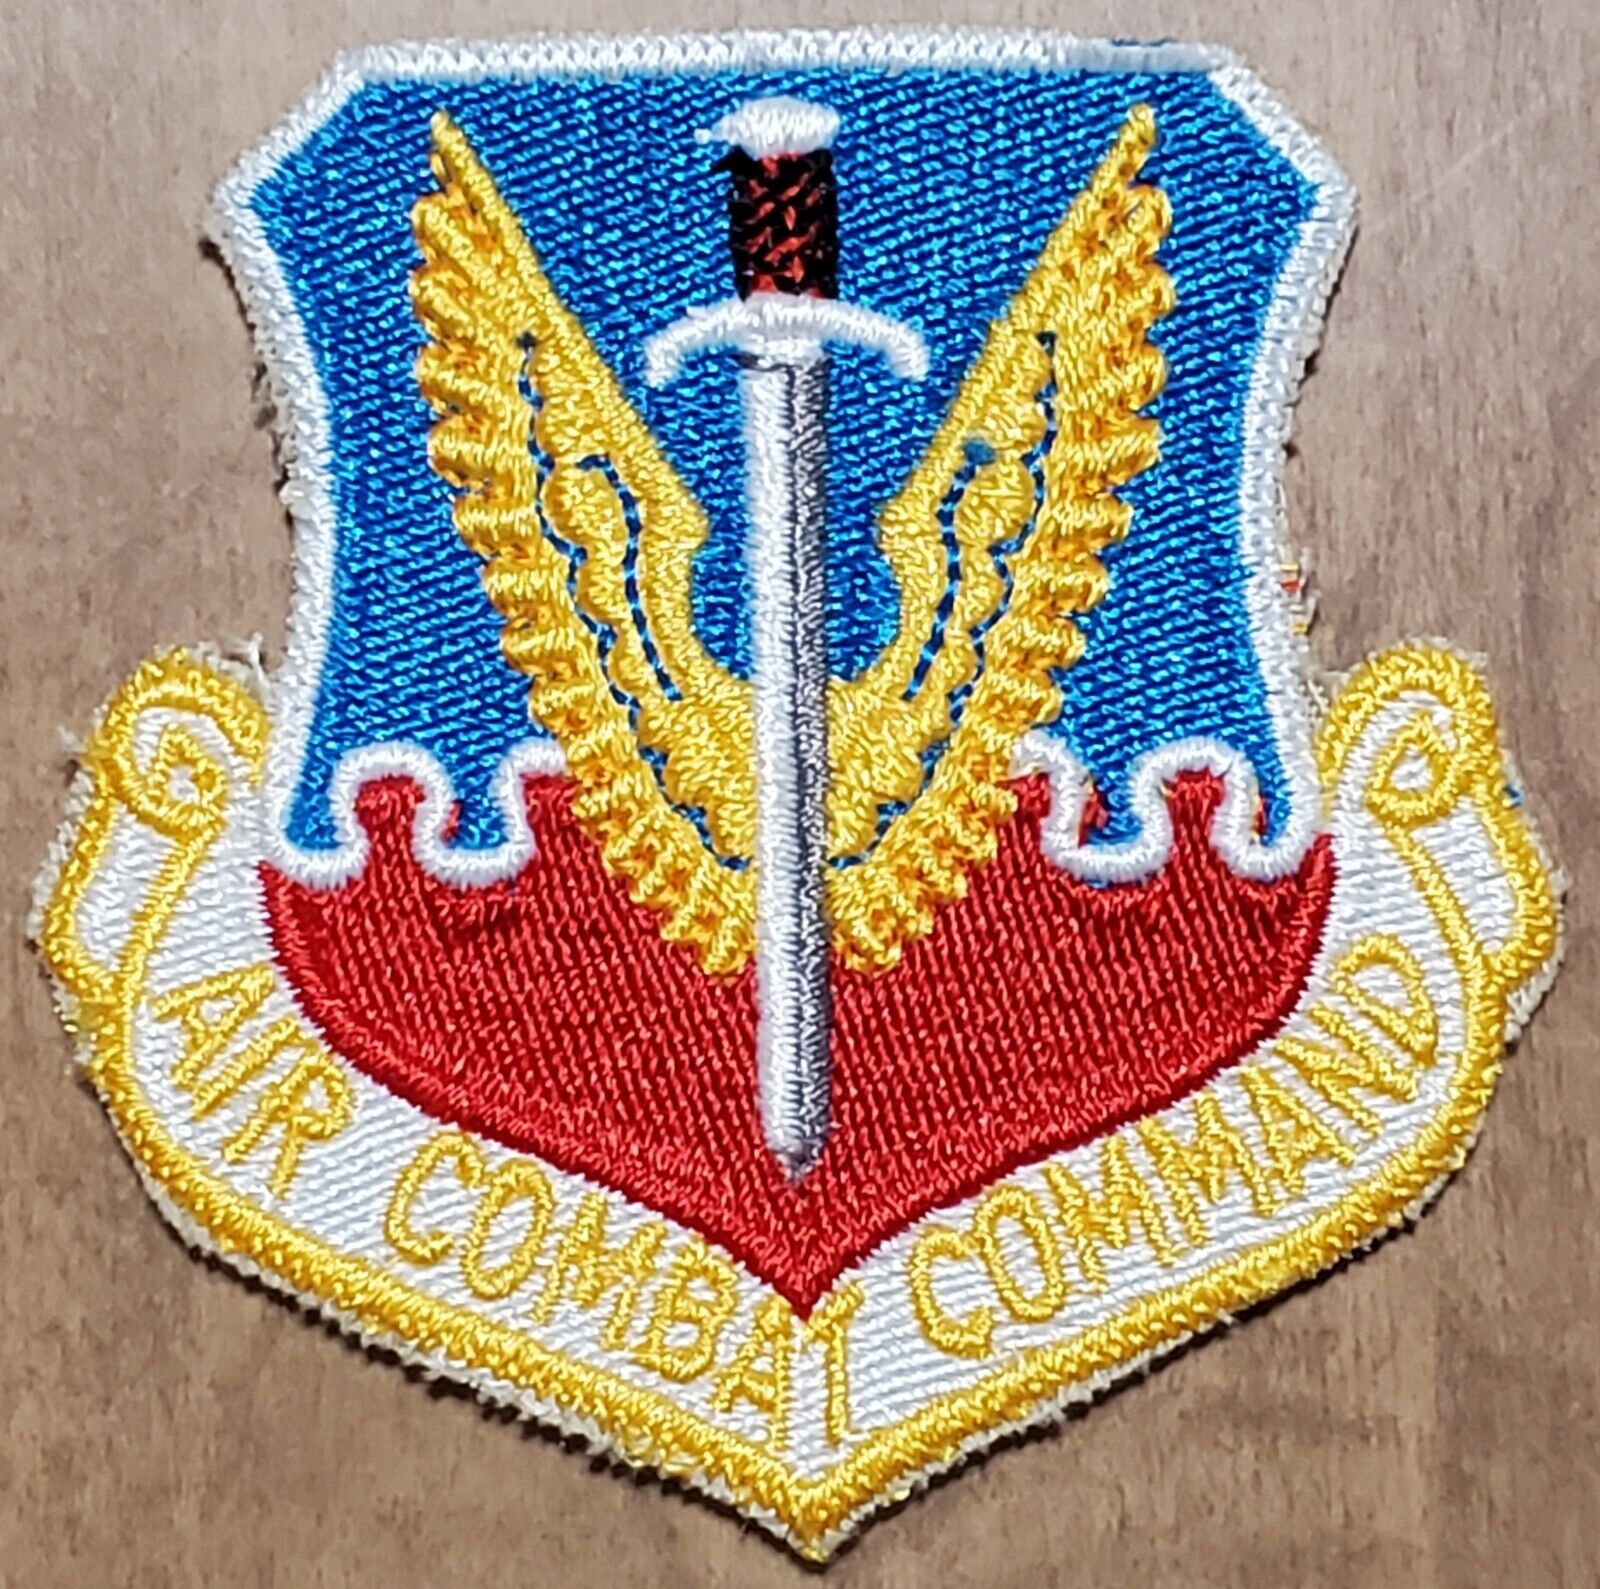 USAF AIR FORCE: AIR COMBAT COMMAND COLOR DRESS PATCH VINTAGE ORIG h&l MILITARY